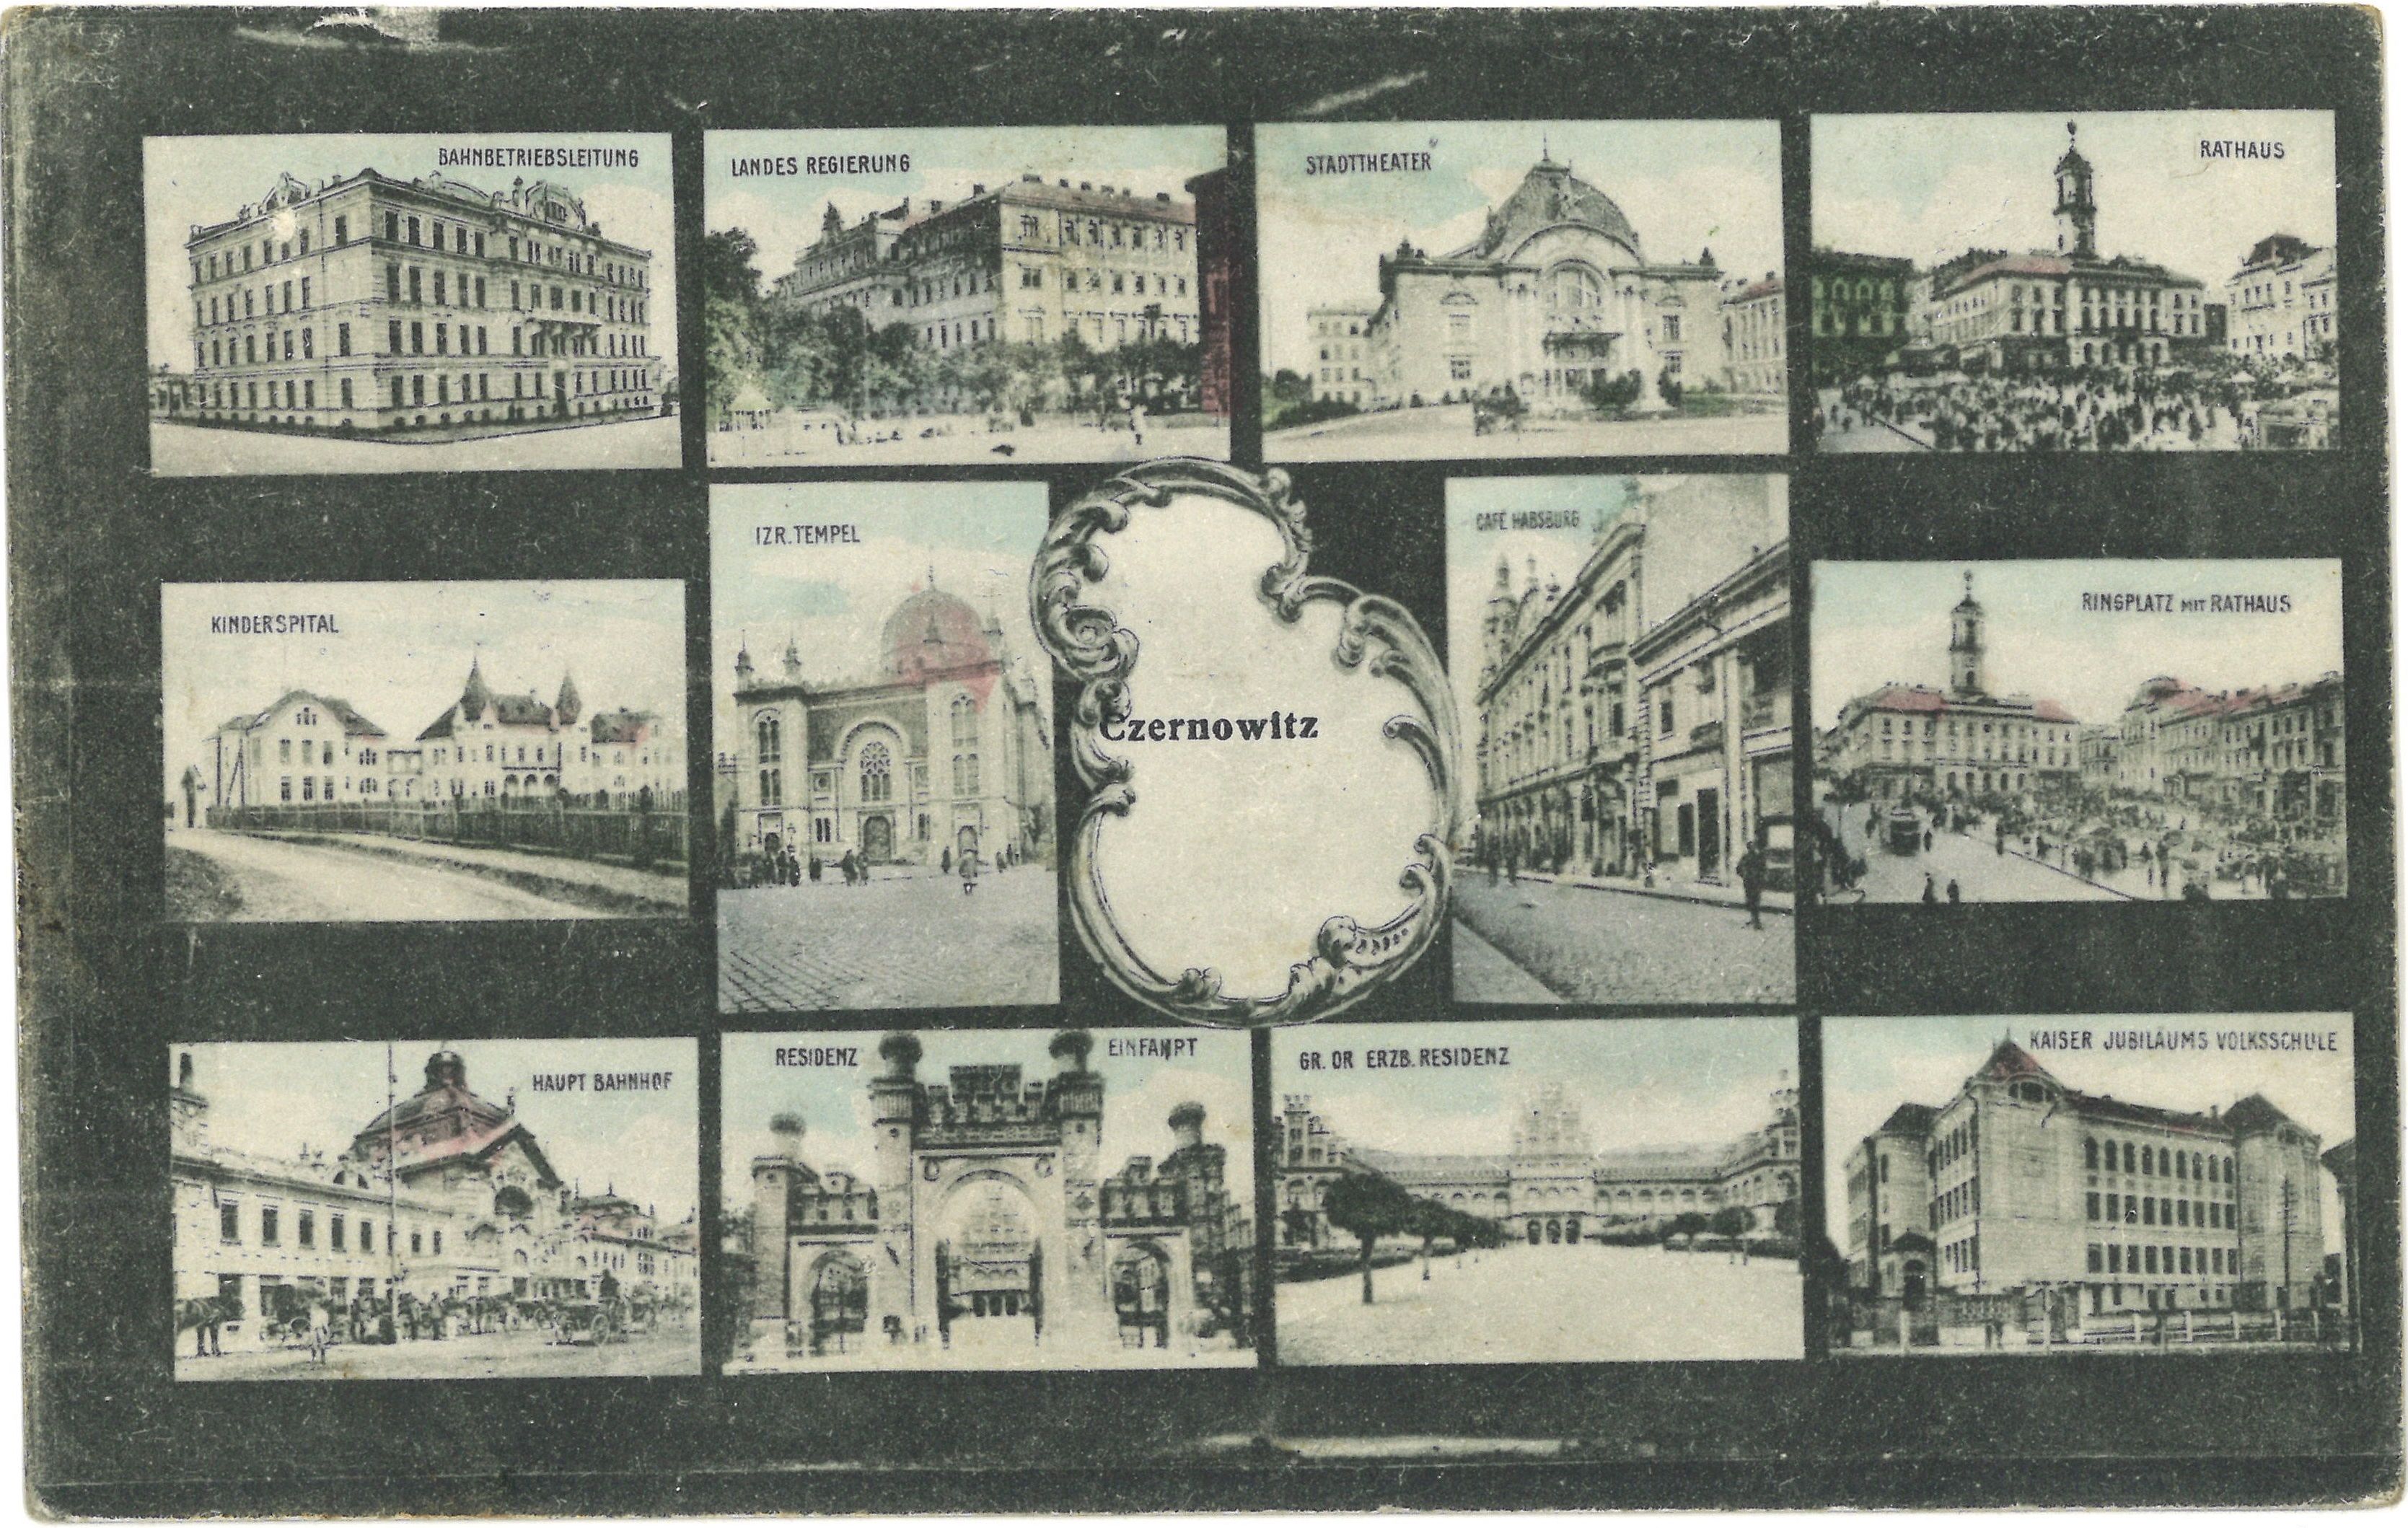 Ansichtkaart van het oude Czernowitz (nu: Tsjernivtsi)